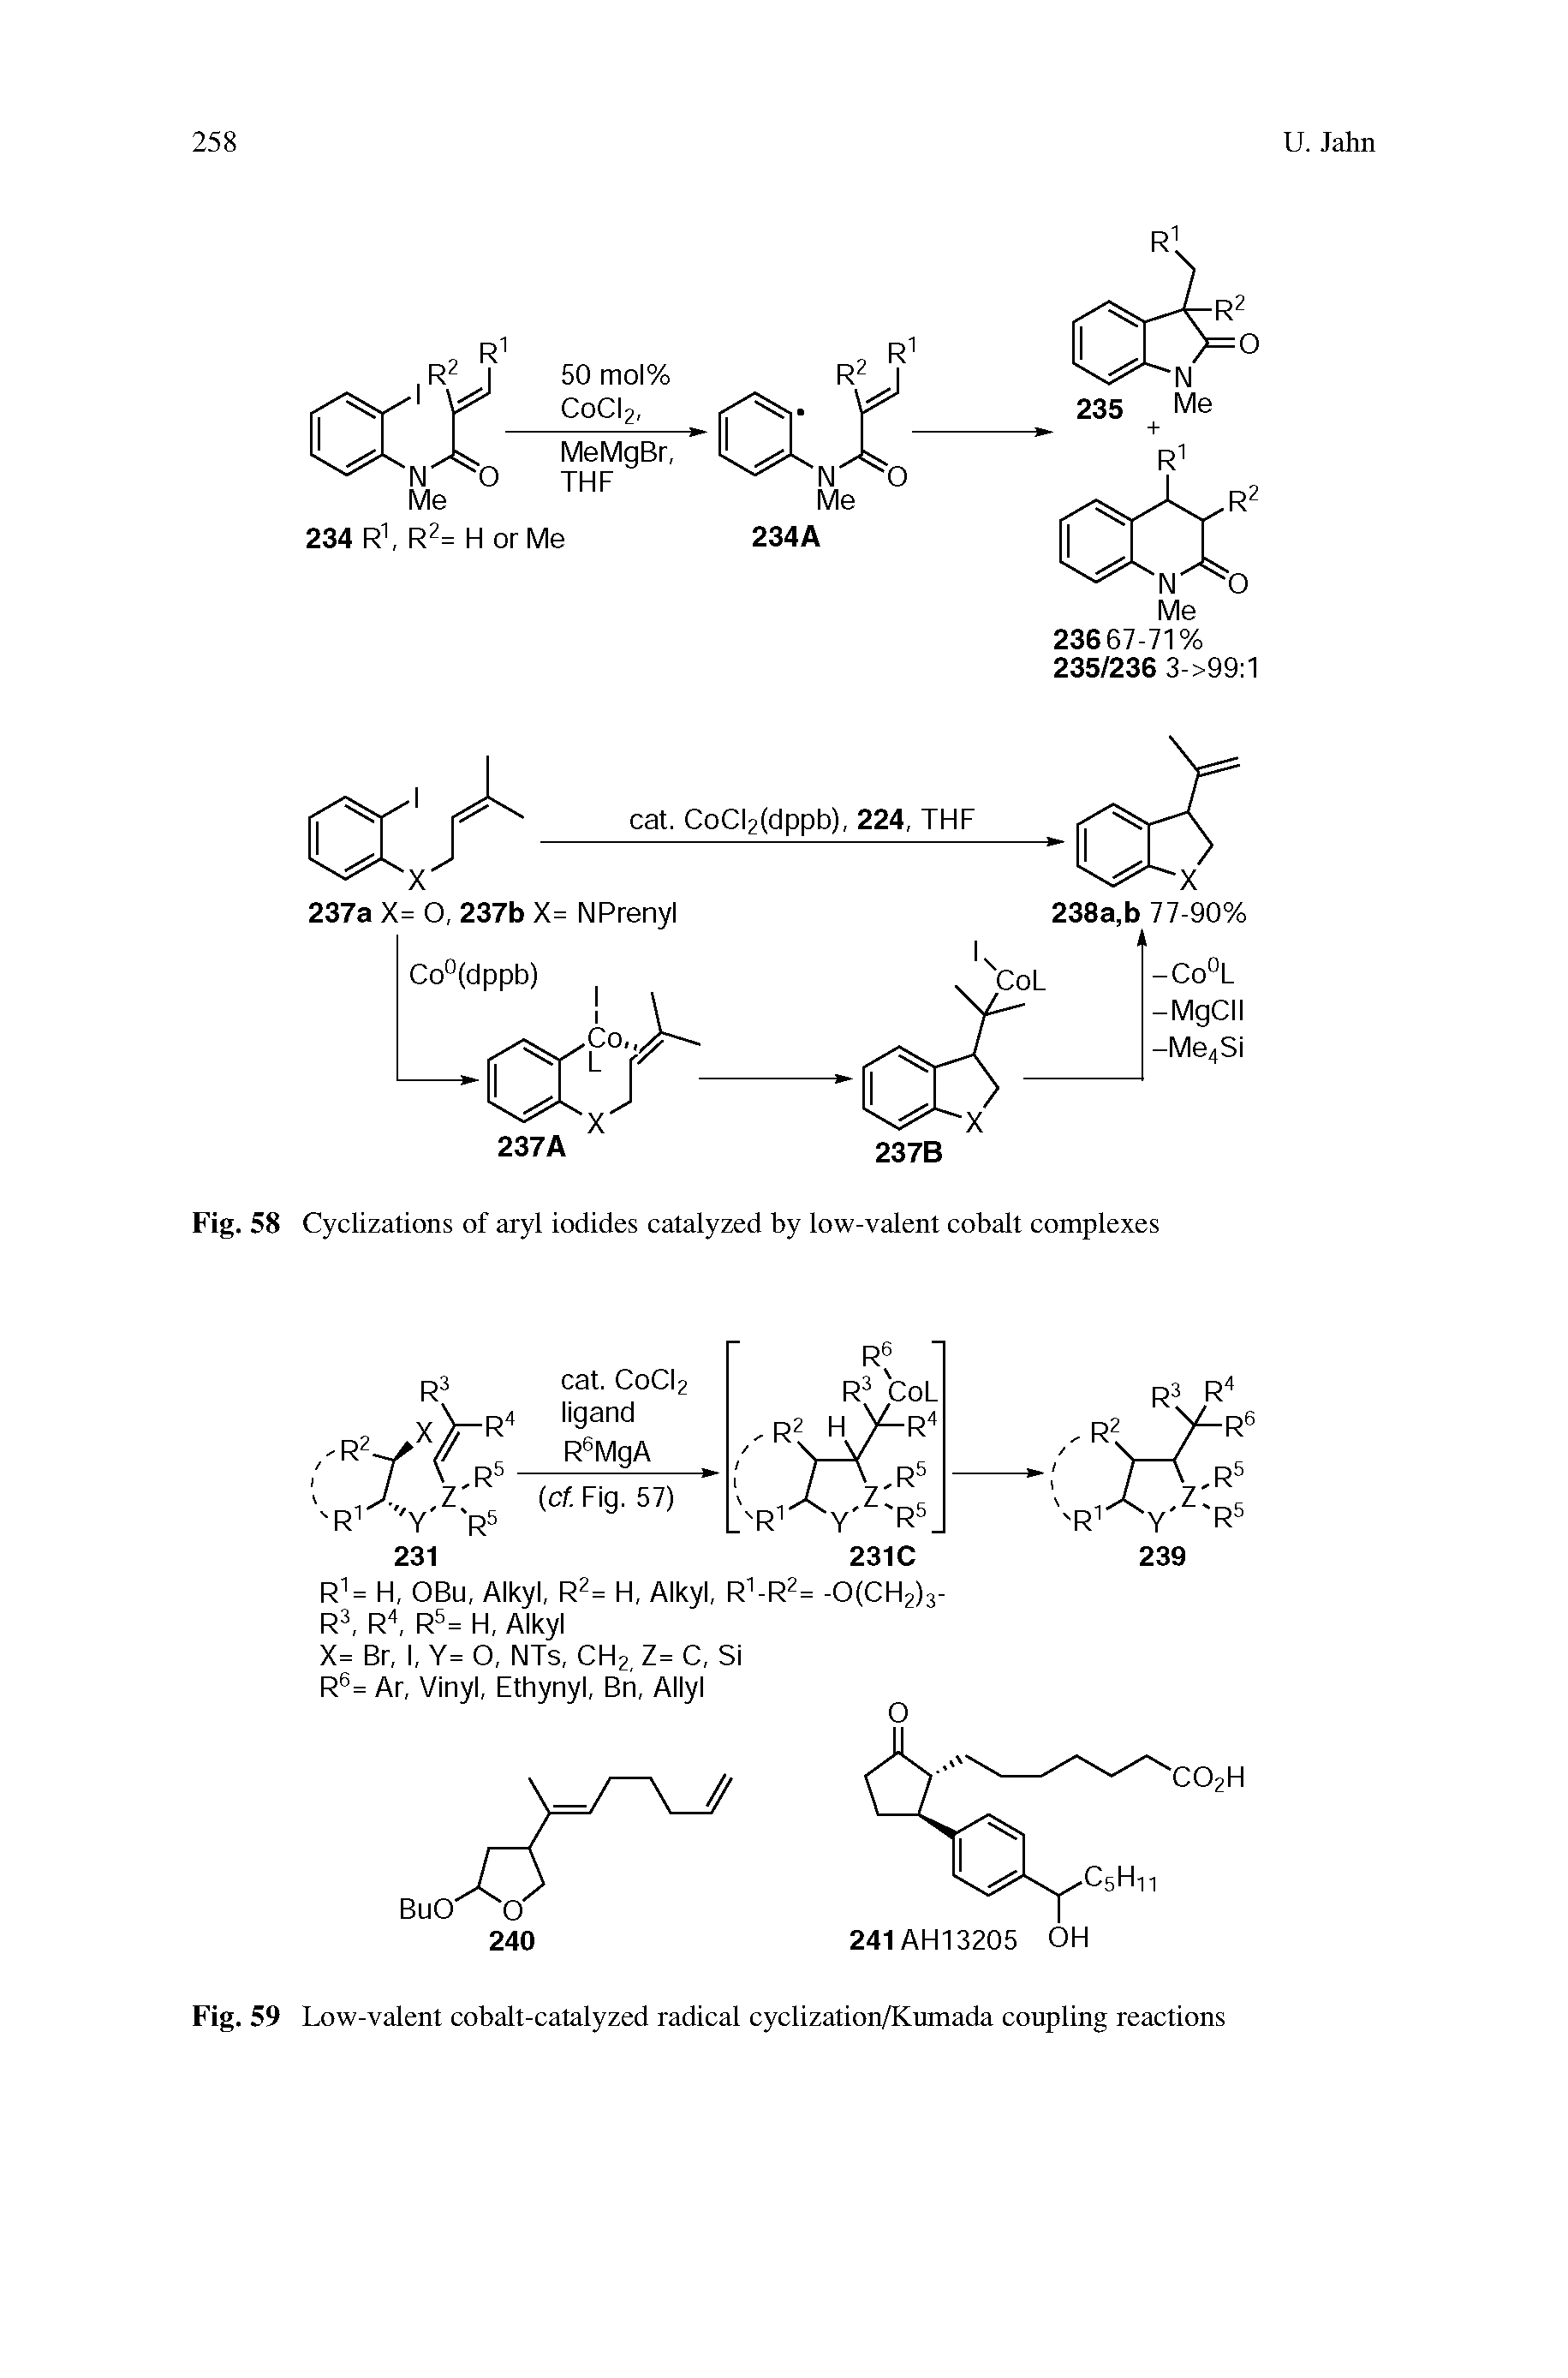 Fig. 59 Low-valent cobalt-catalyzed radical cyclization/Kumada coupling reactions...